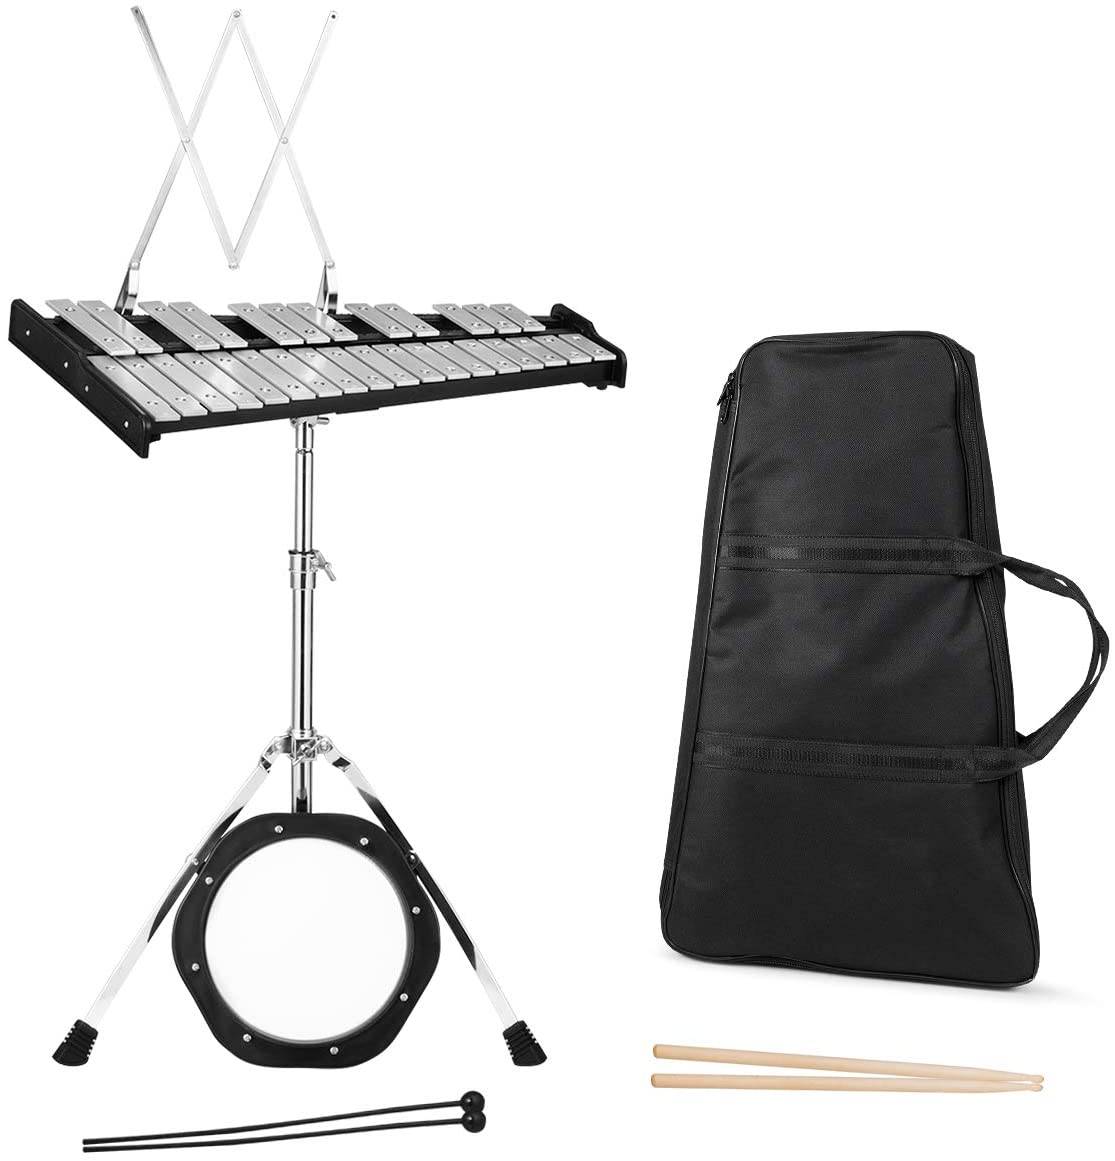 Giantex Percussion Kit